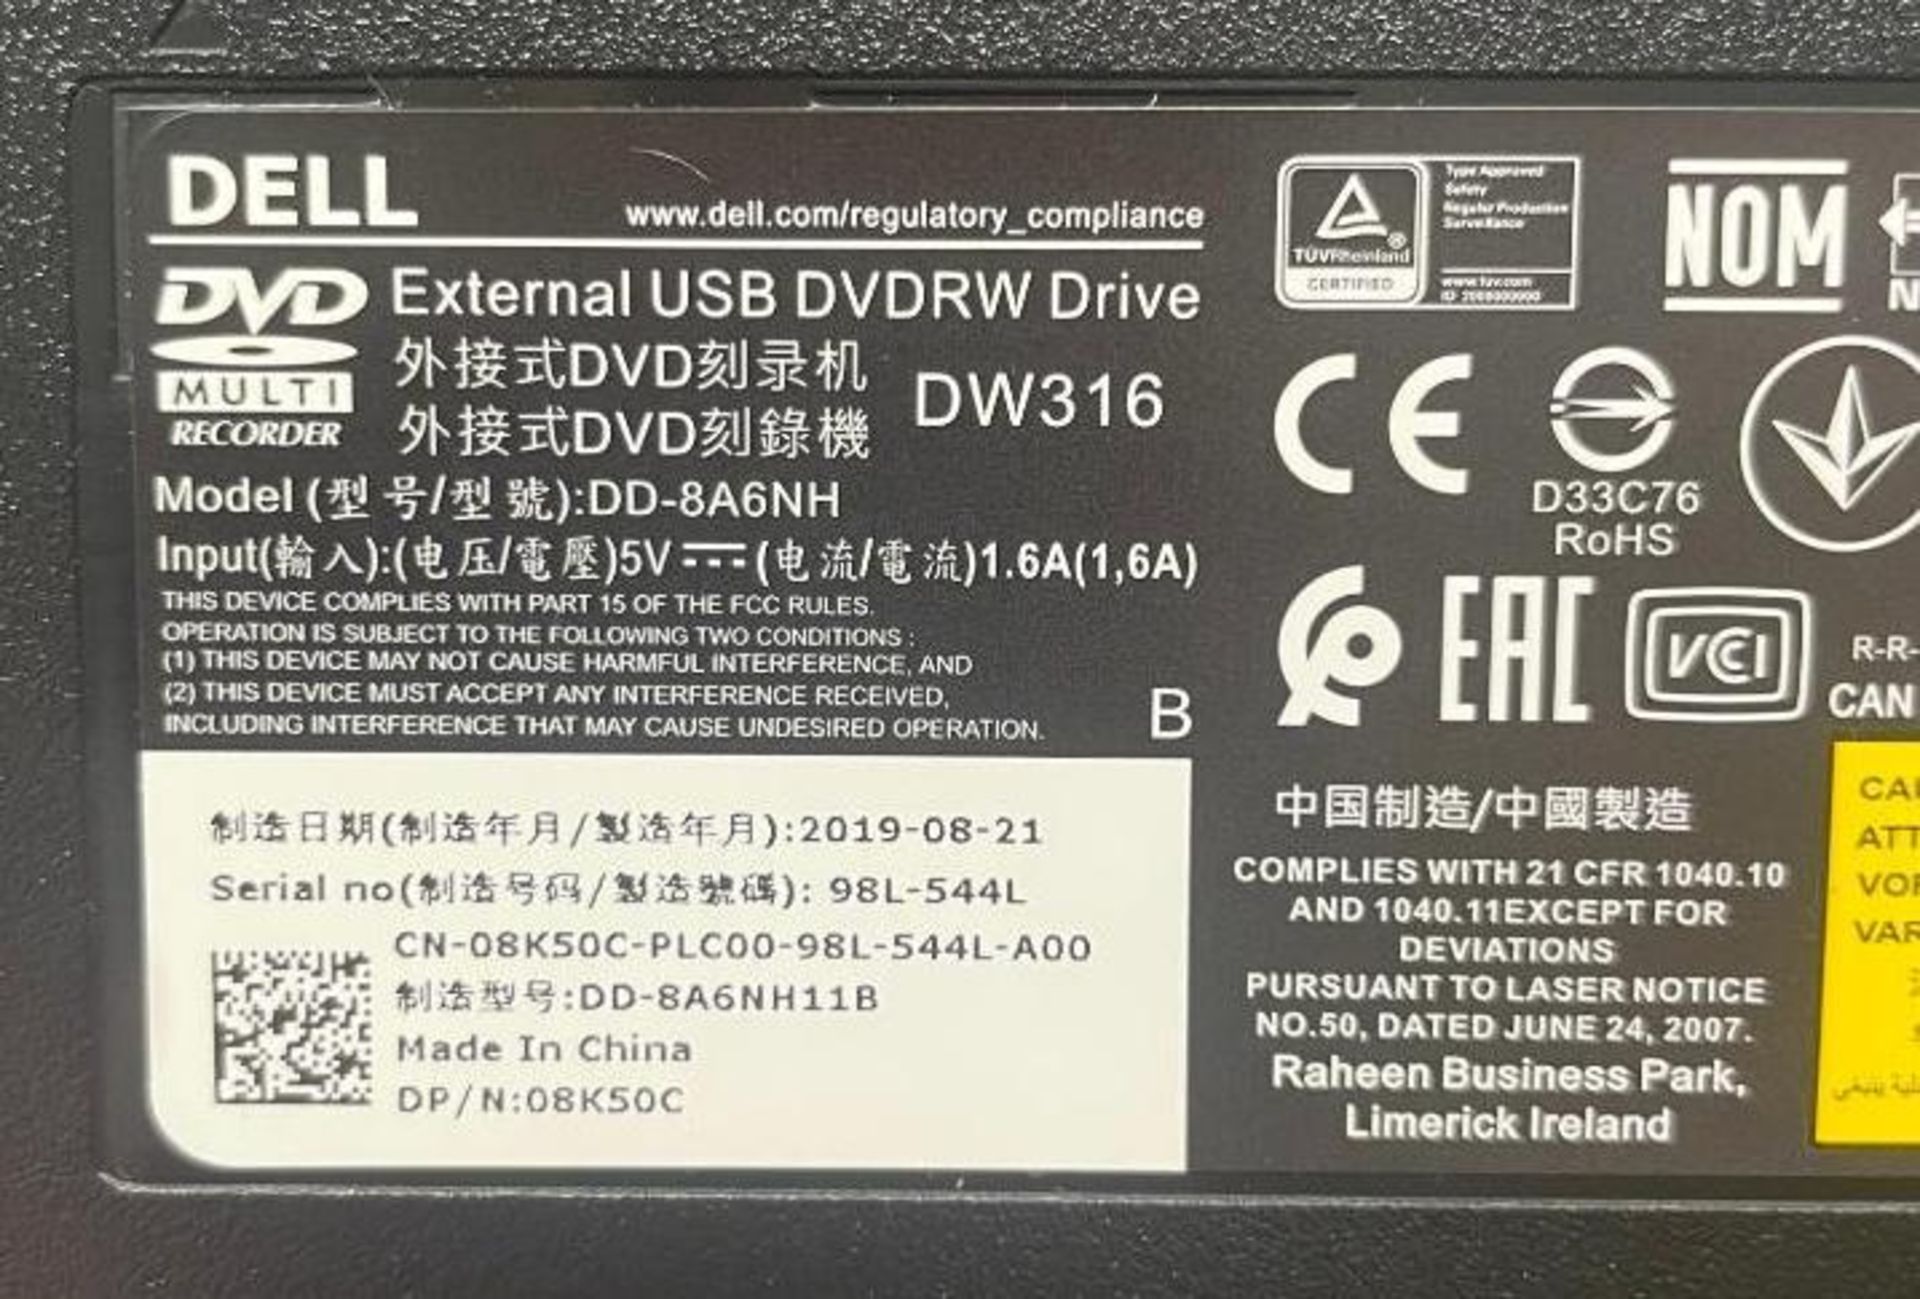 EXTERNAL USB DVDRW DRIVE BRAND/MODEL: DELL DD-8A6NH QTY: 1 - Image 2 of 2